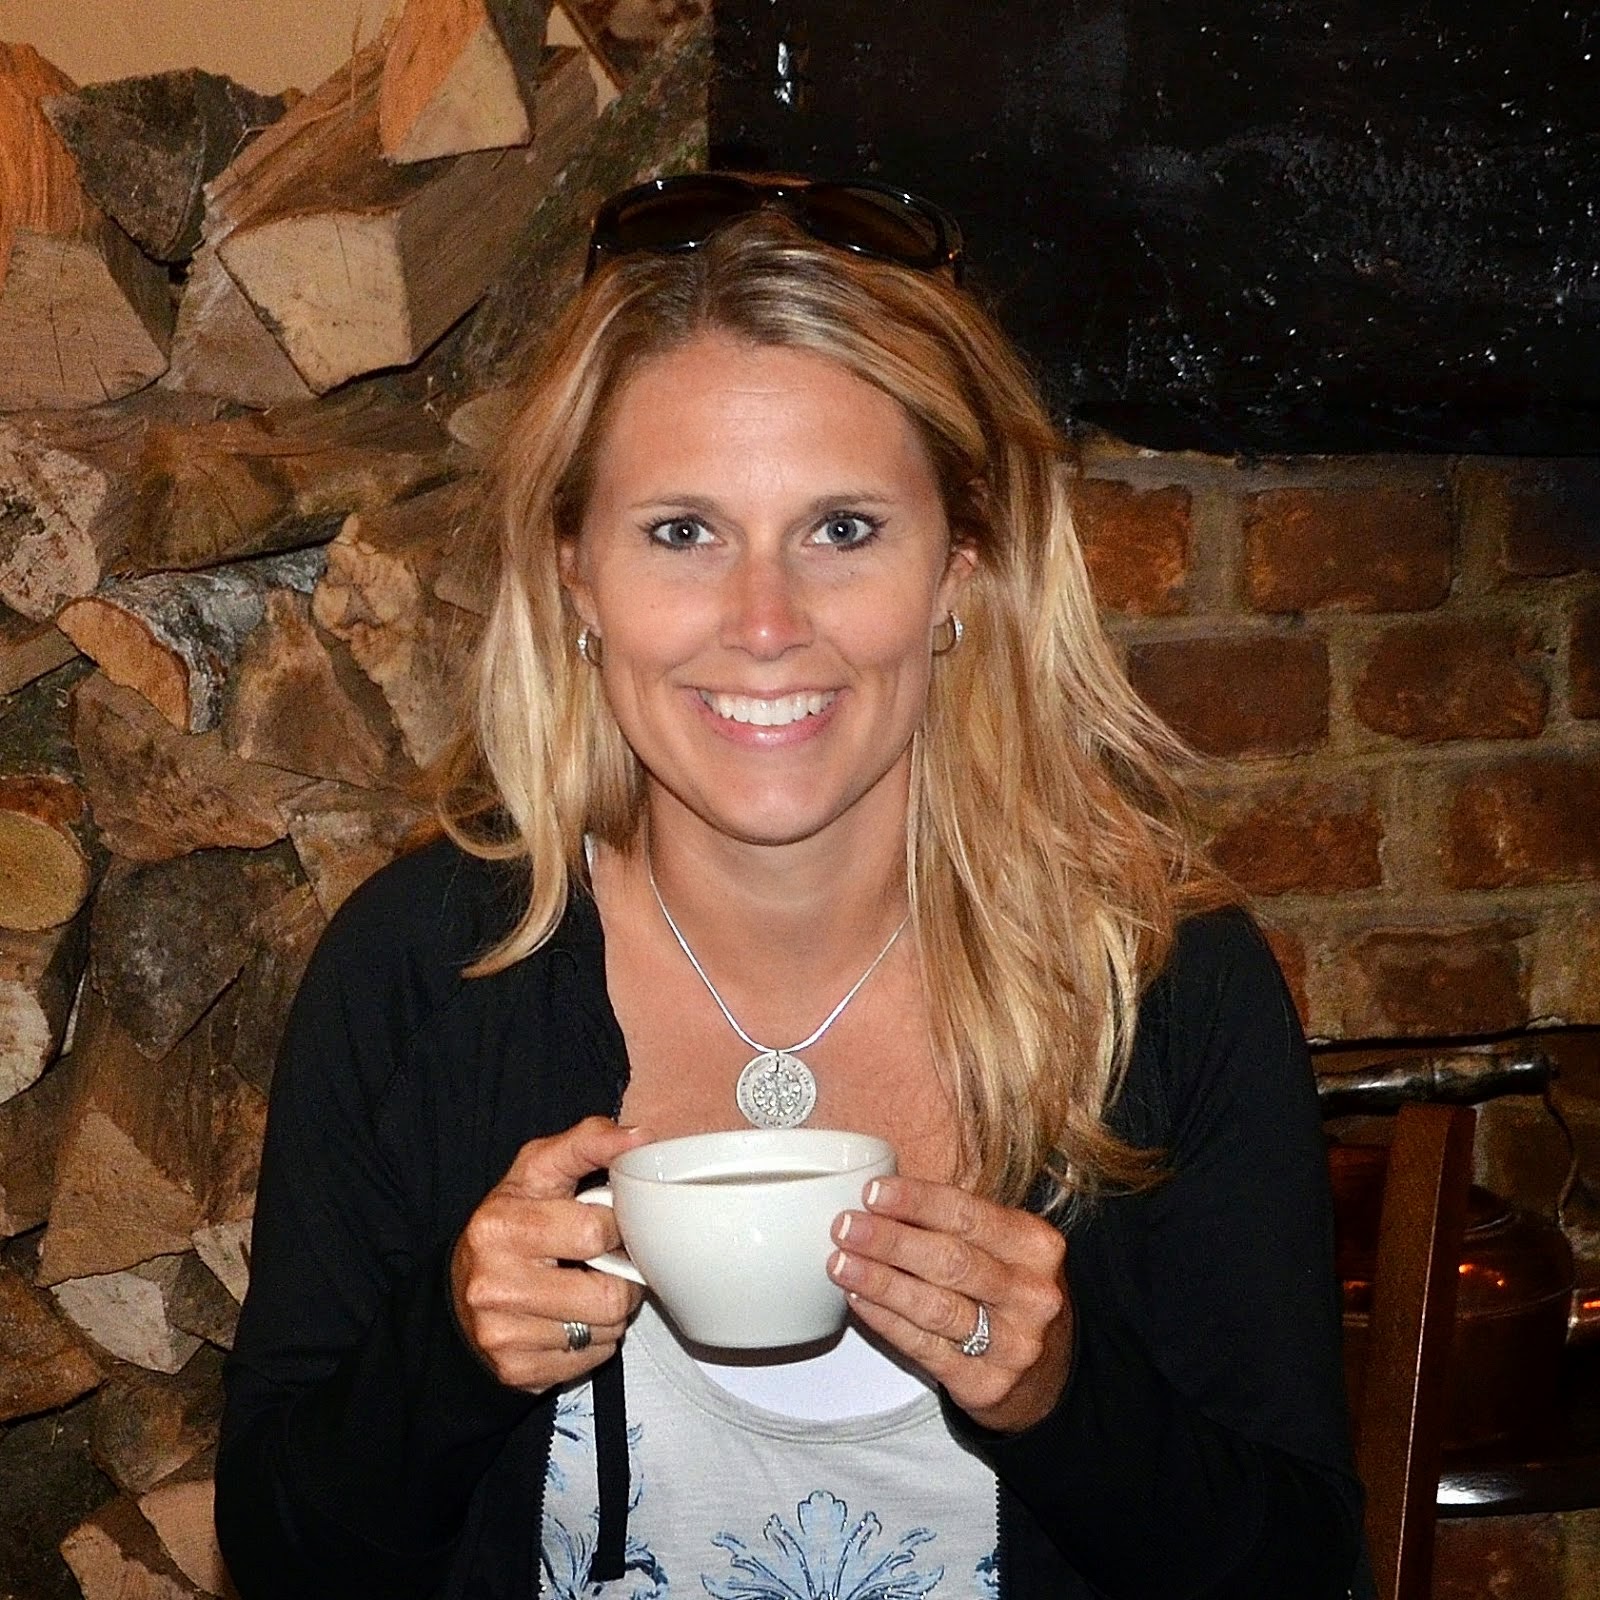 Drinking Tea in an England Pub